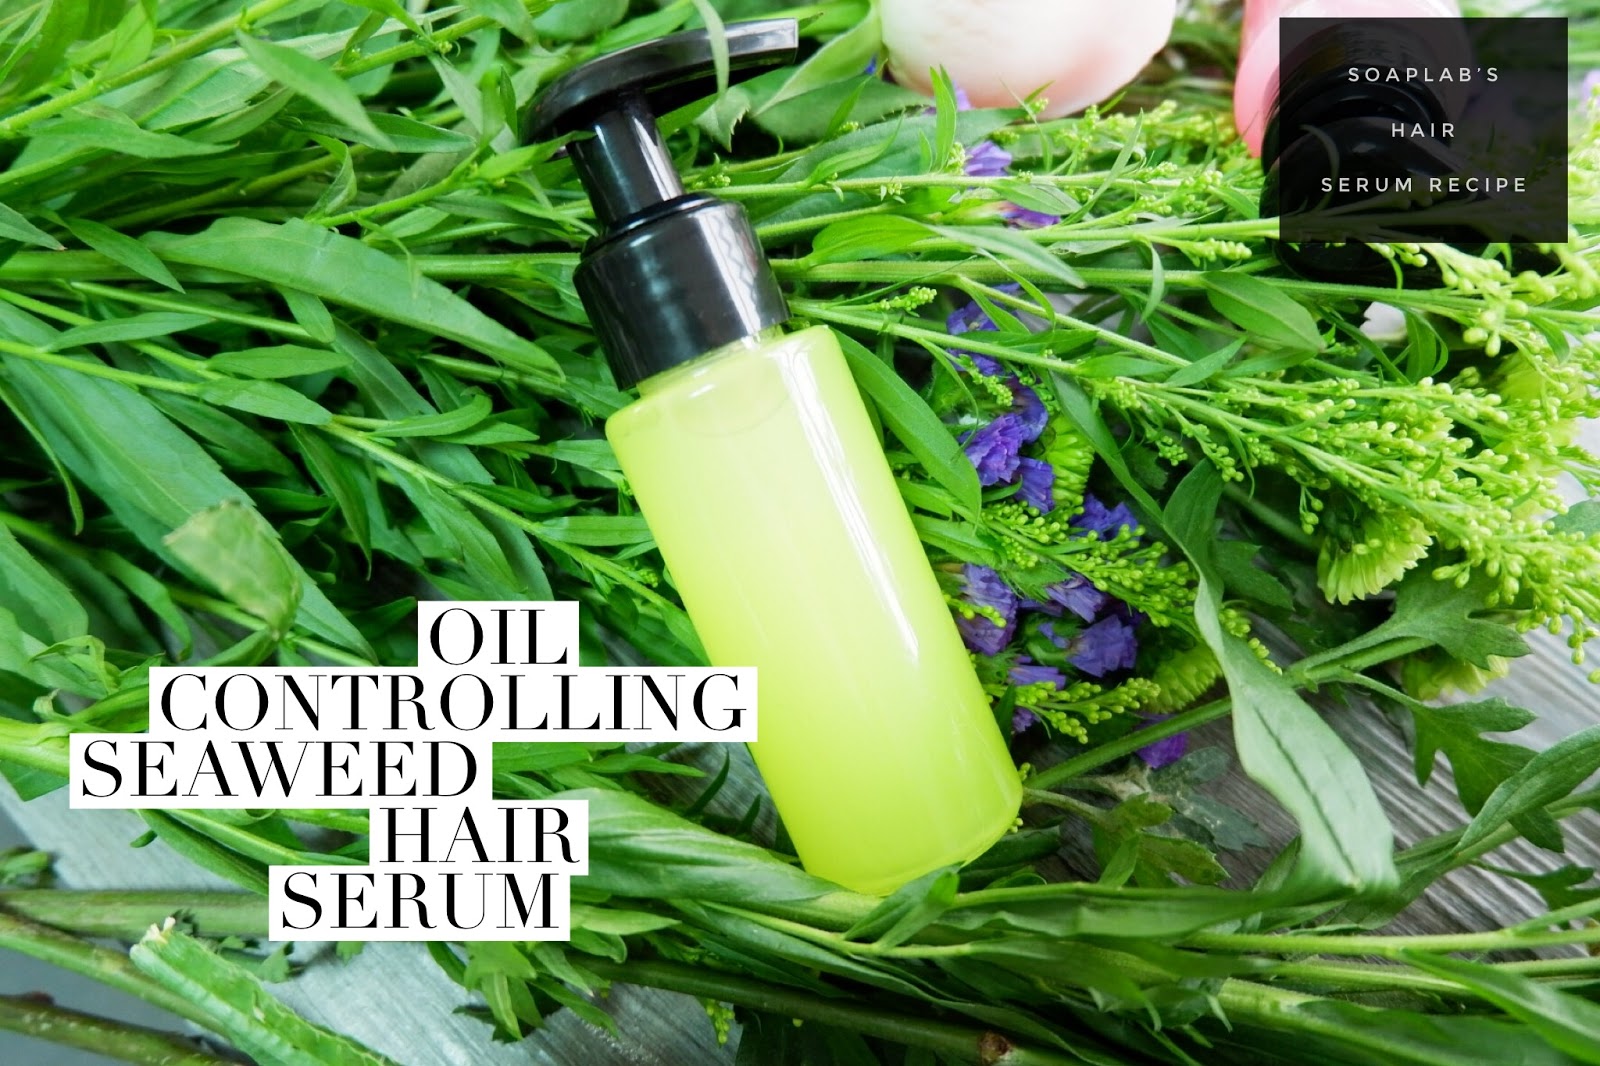 SoapLab Malaysia: DIY Hair Serum To Control Oil Using Seaweed